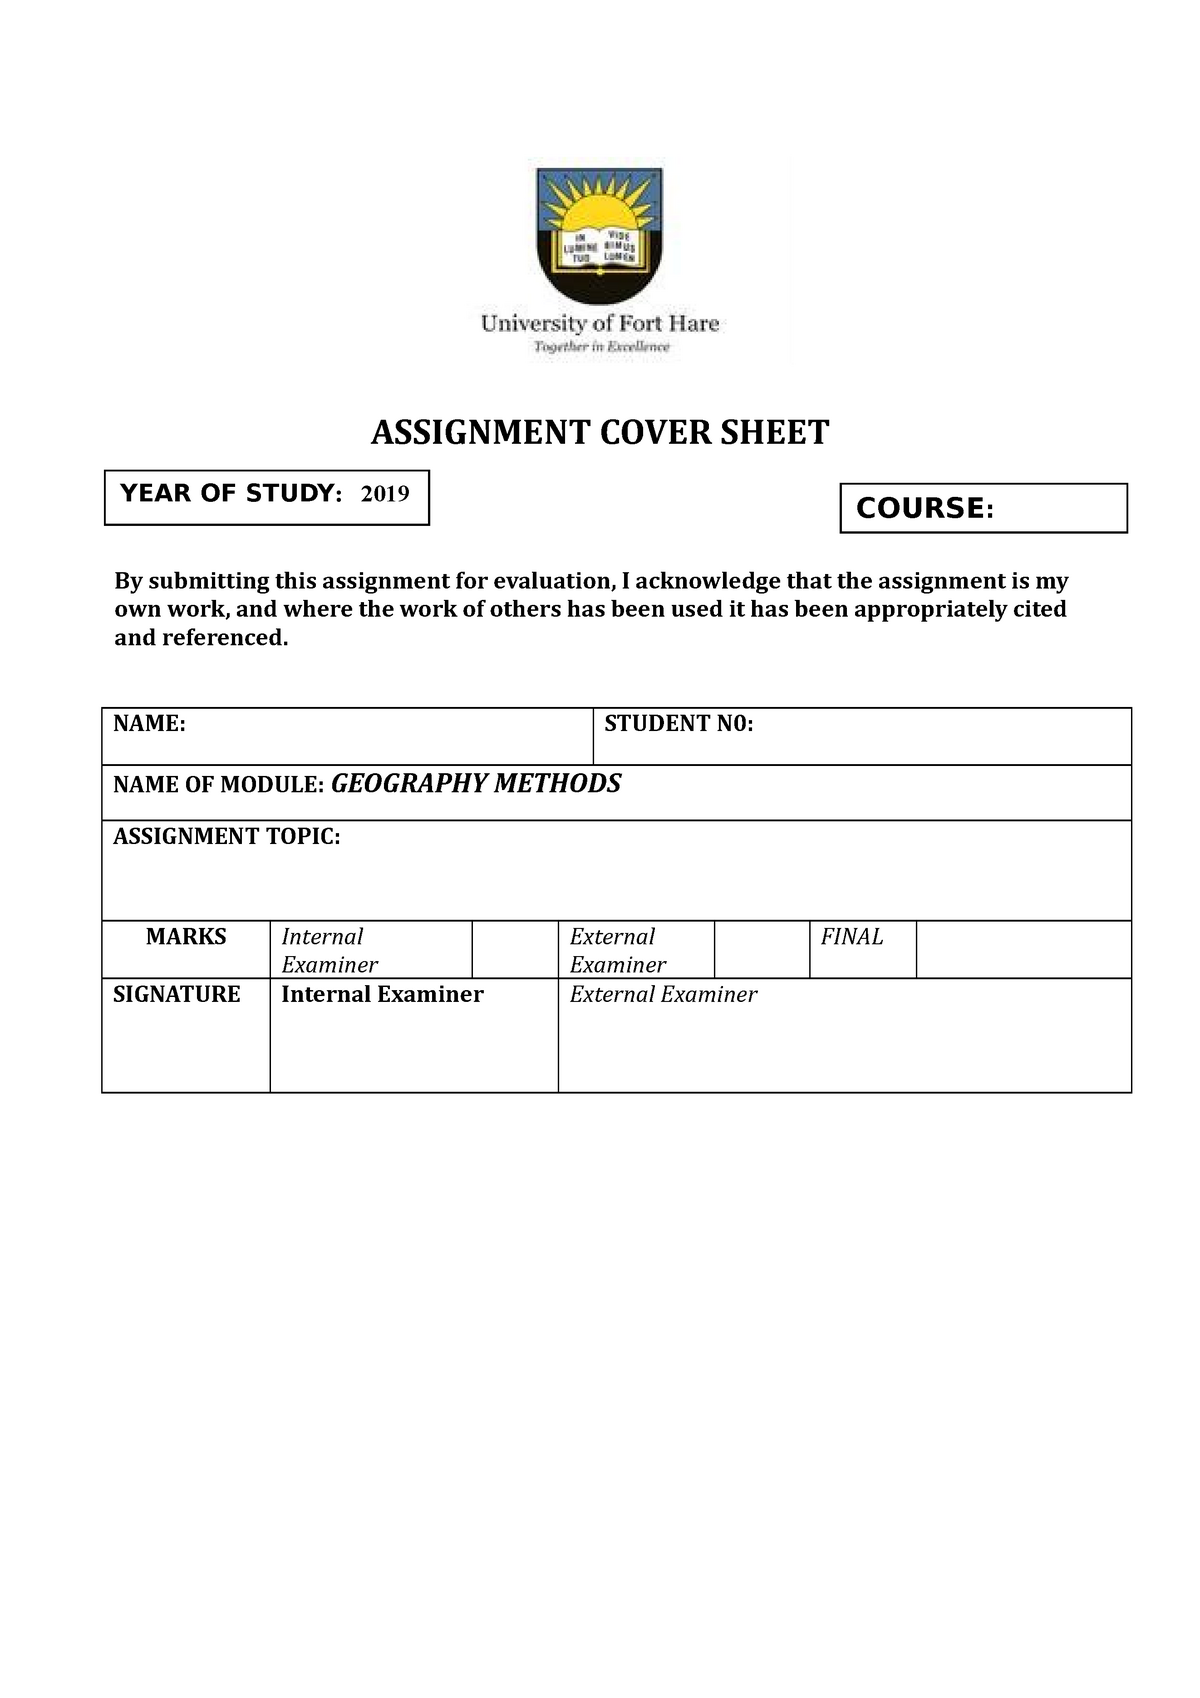 dkit assignment cover sheet